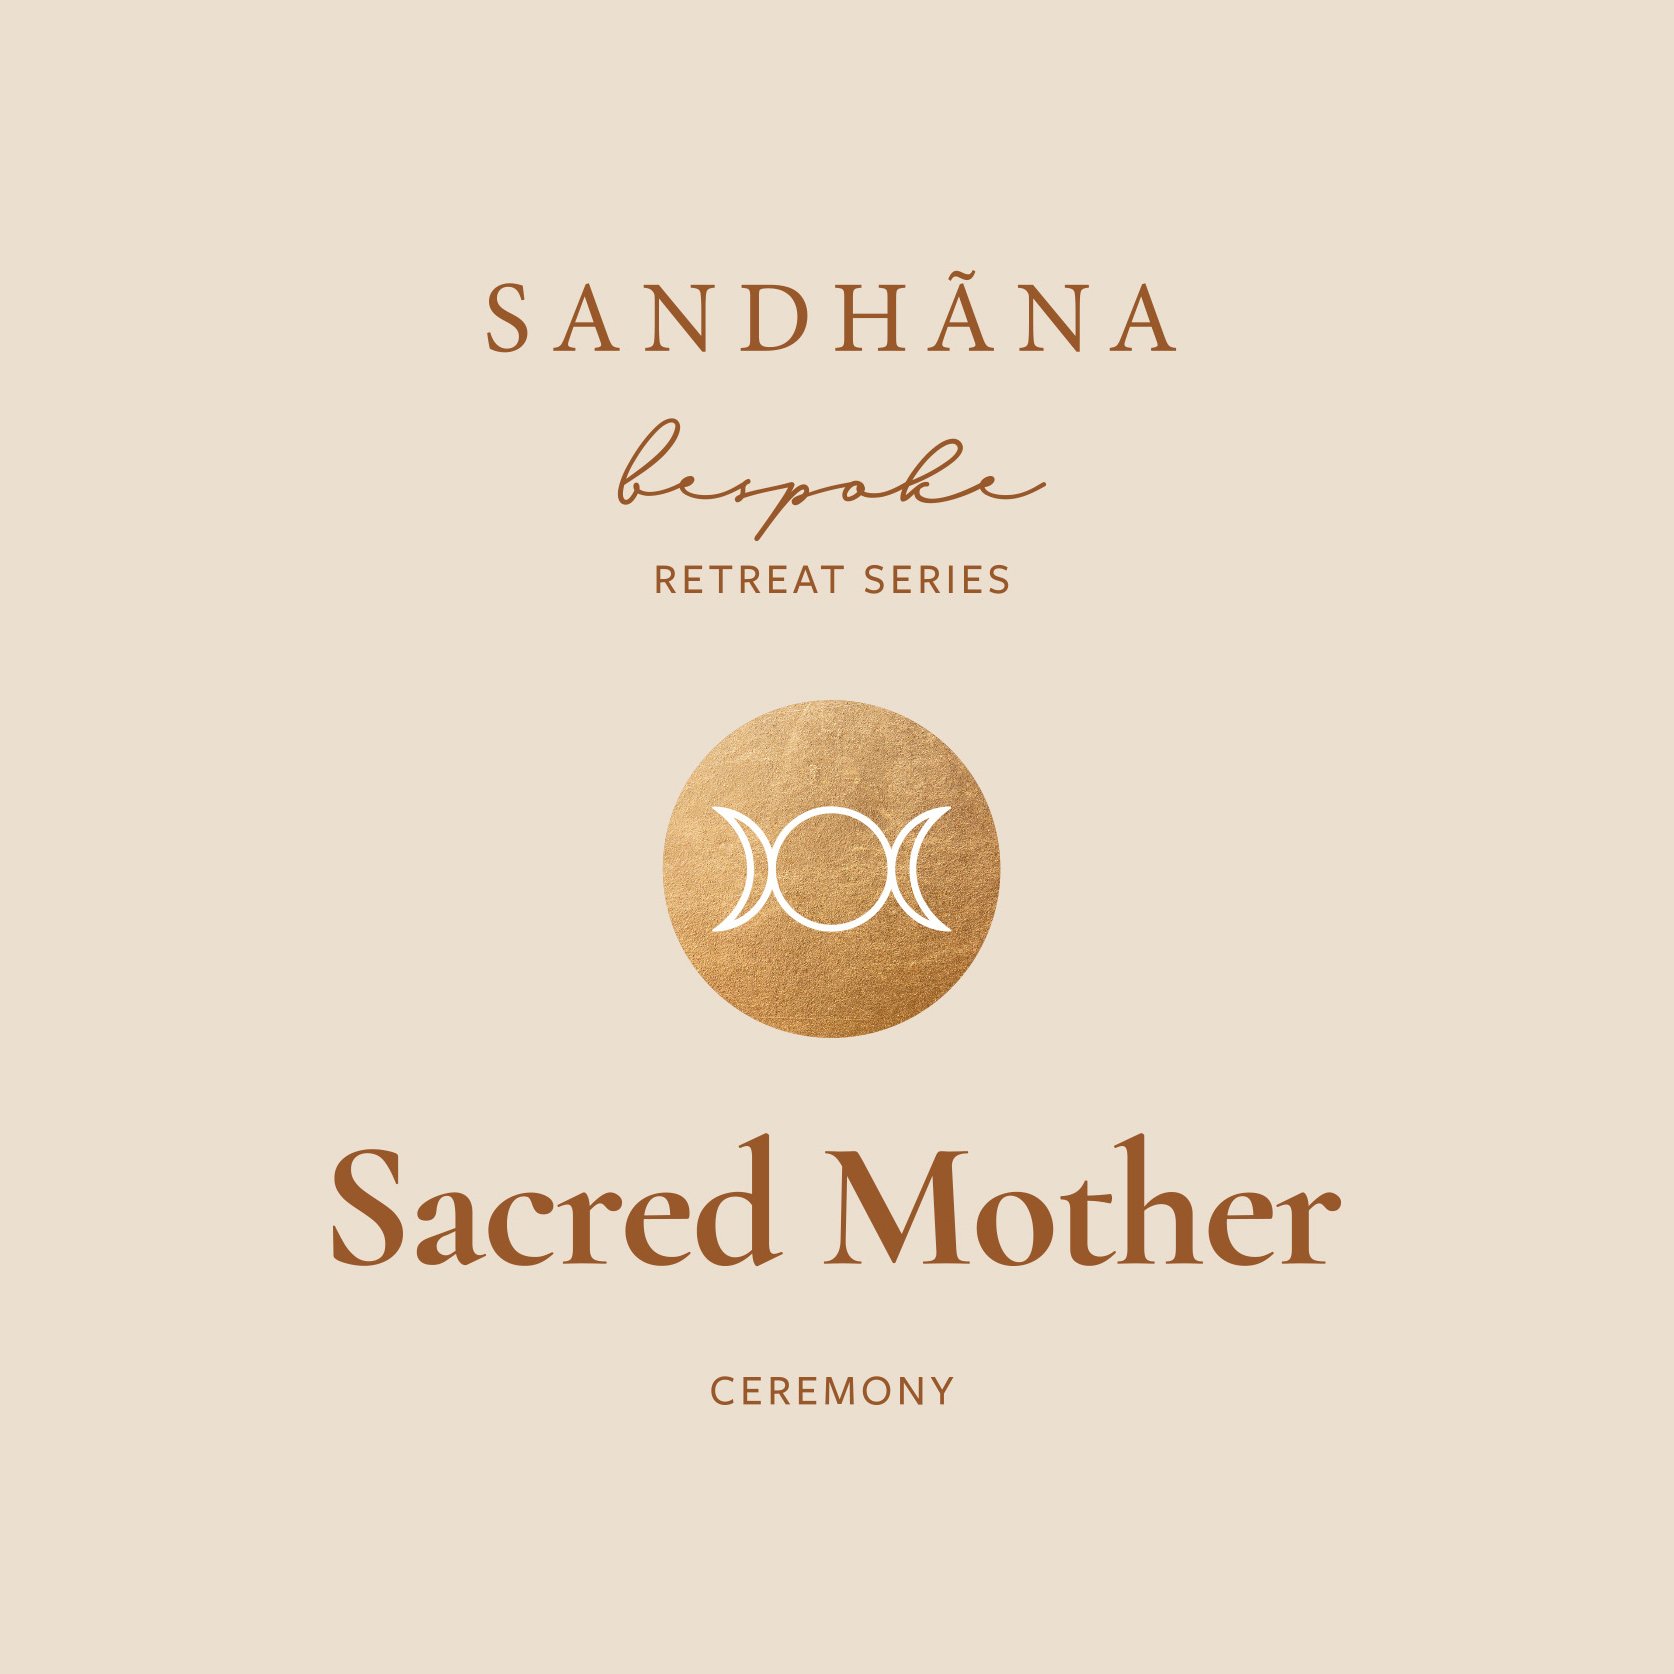 Sandhana_Bespoke_SacredMother_retreat_text.jpg